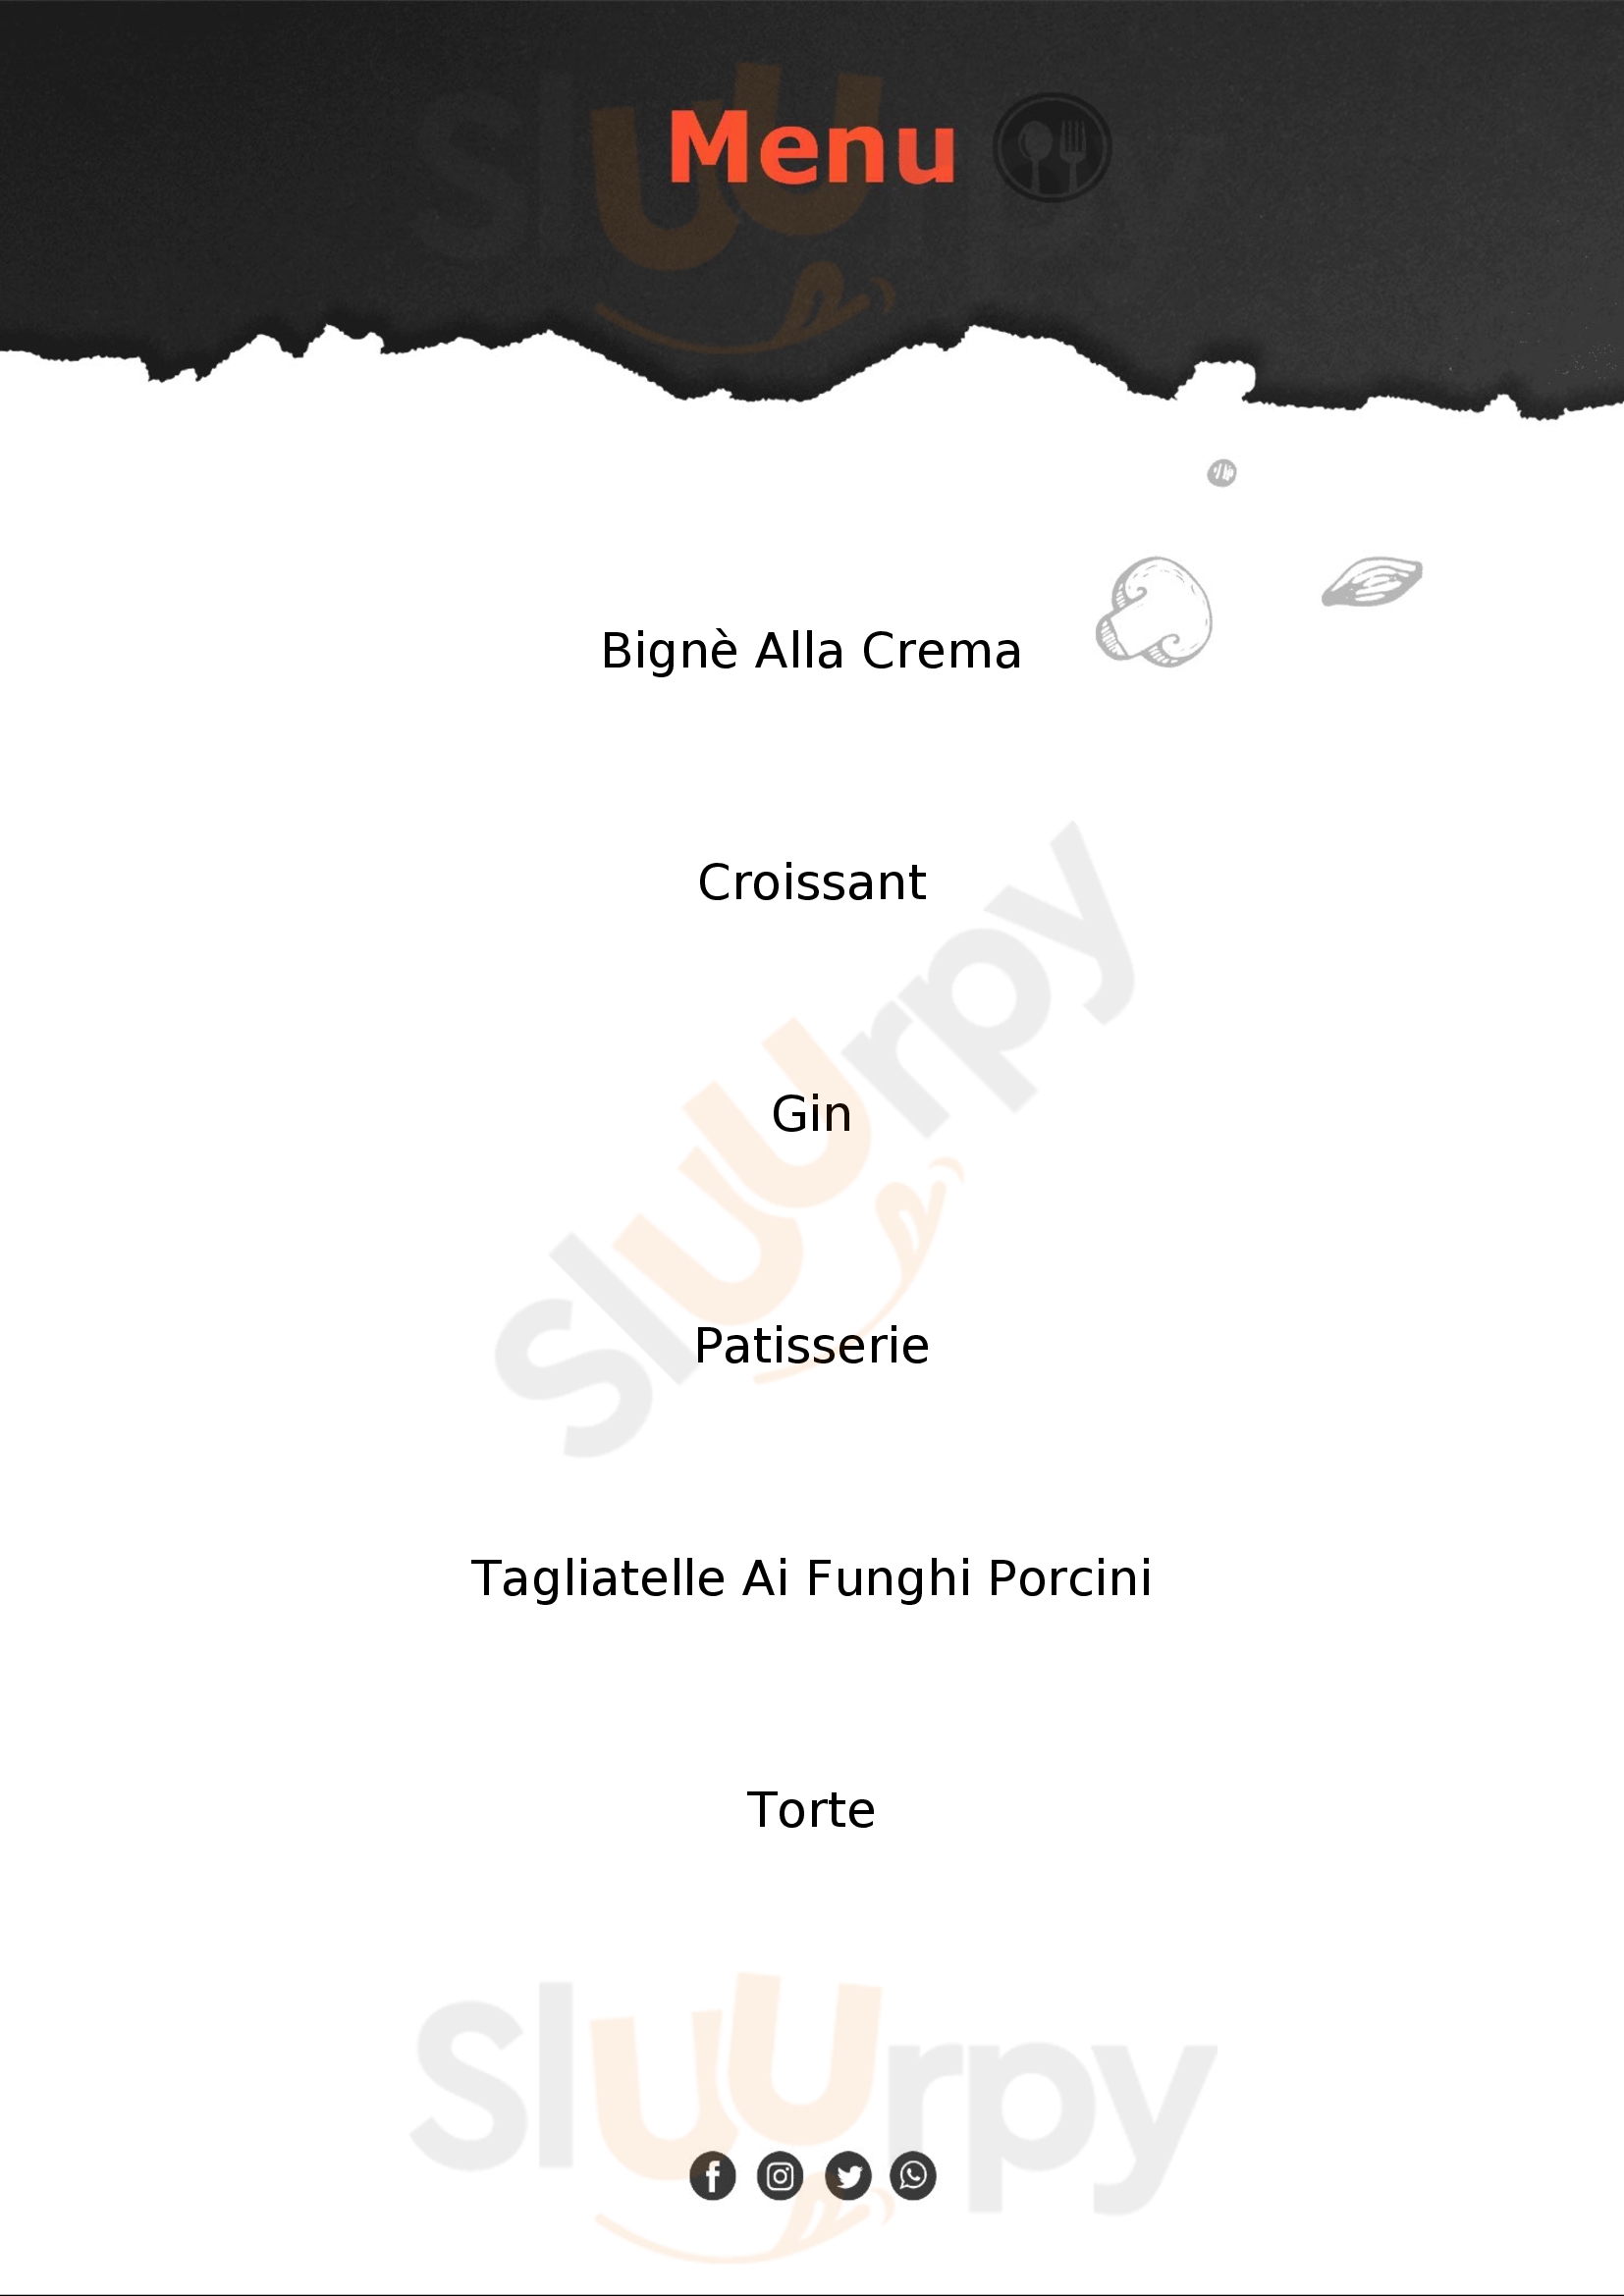 Alterego Cafe Castel Maggiore menù 1 pagina